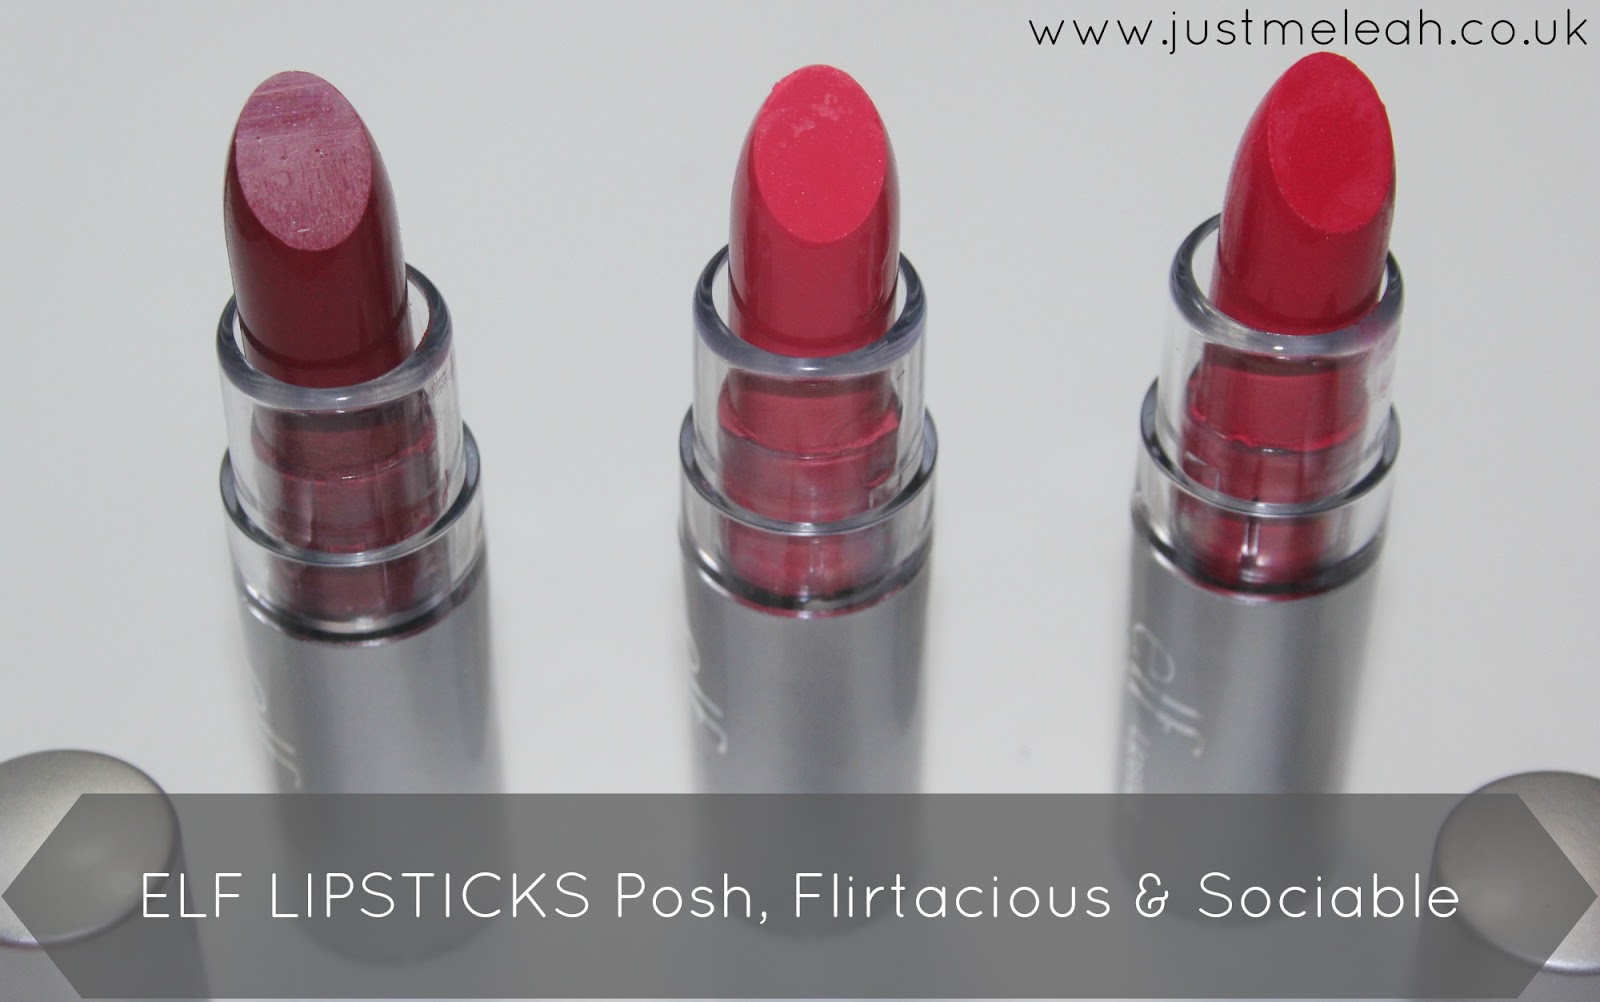 ELF Essential Lipsticks in Posh, Flirtatious & Sociable